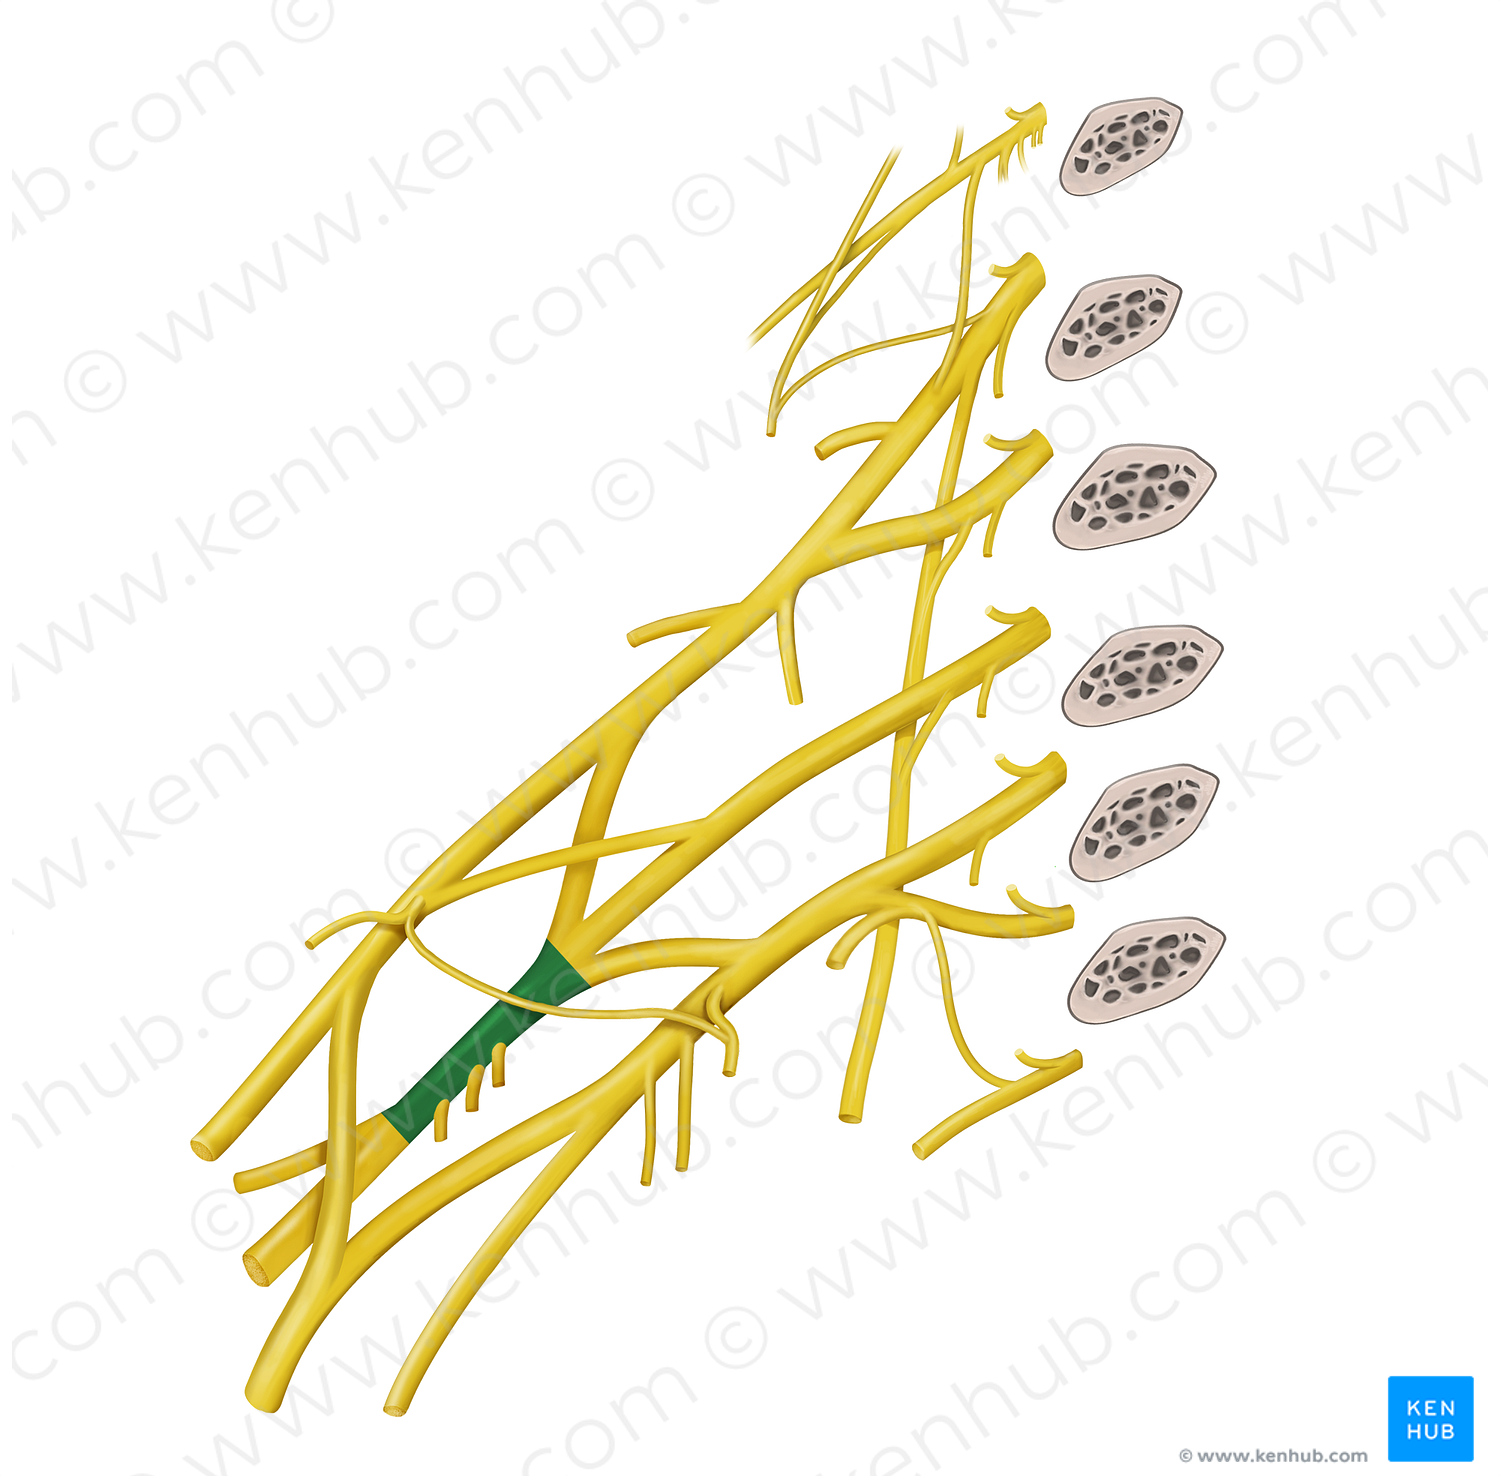 Posterior cord of brachial plexus (#3614)